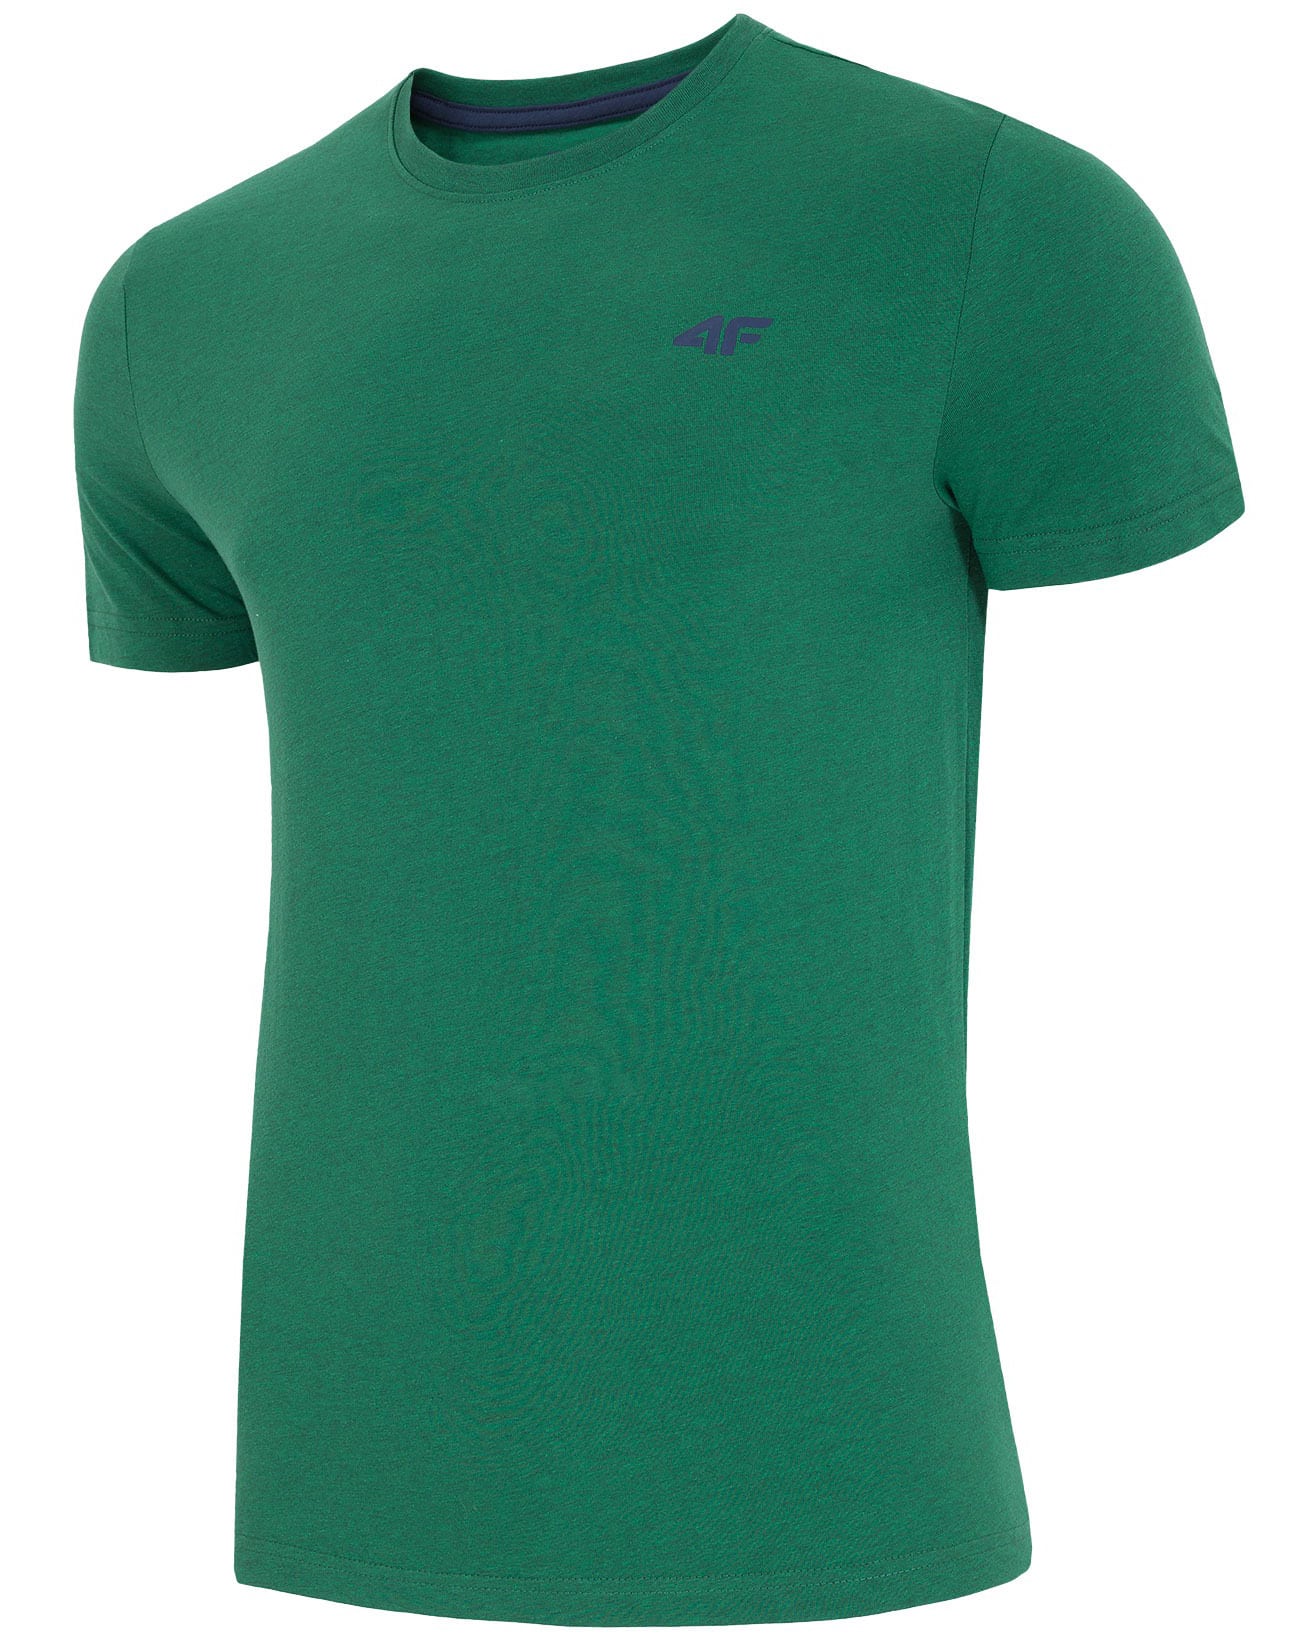 4F Man's T-Shirt - Dark Green Melange